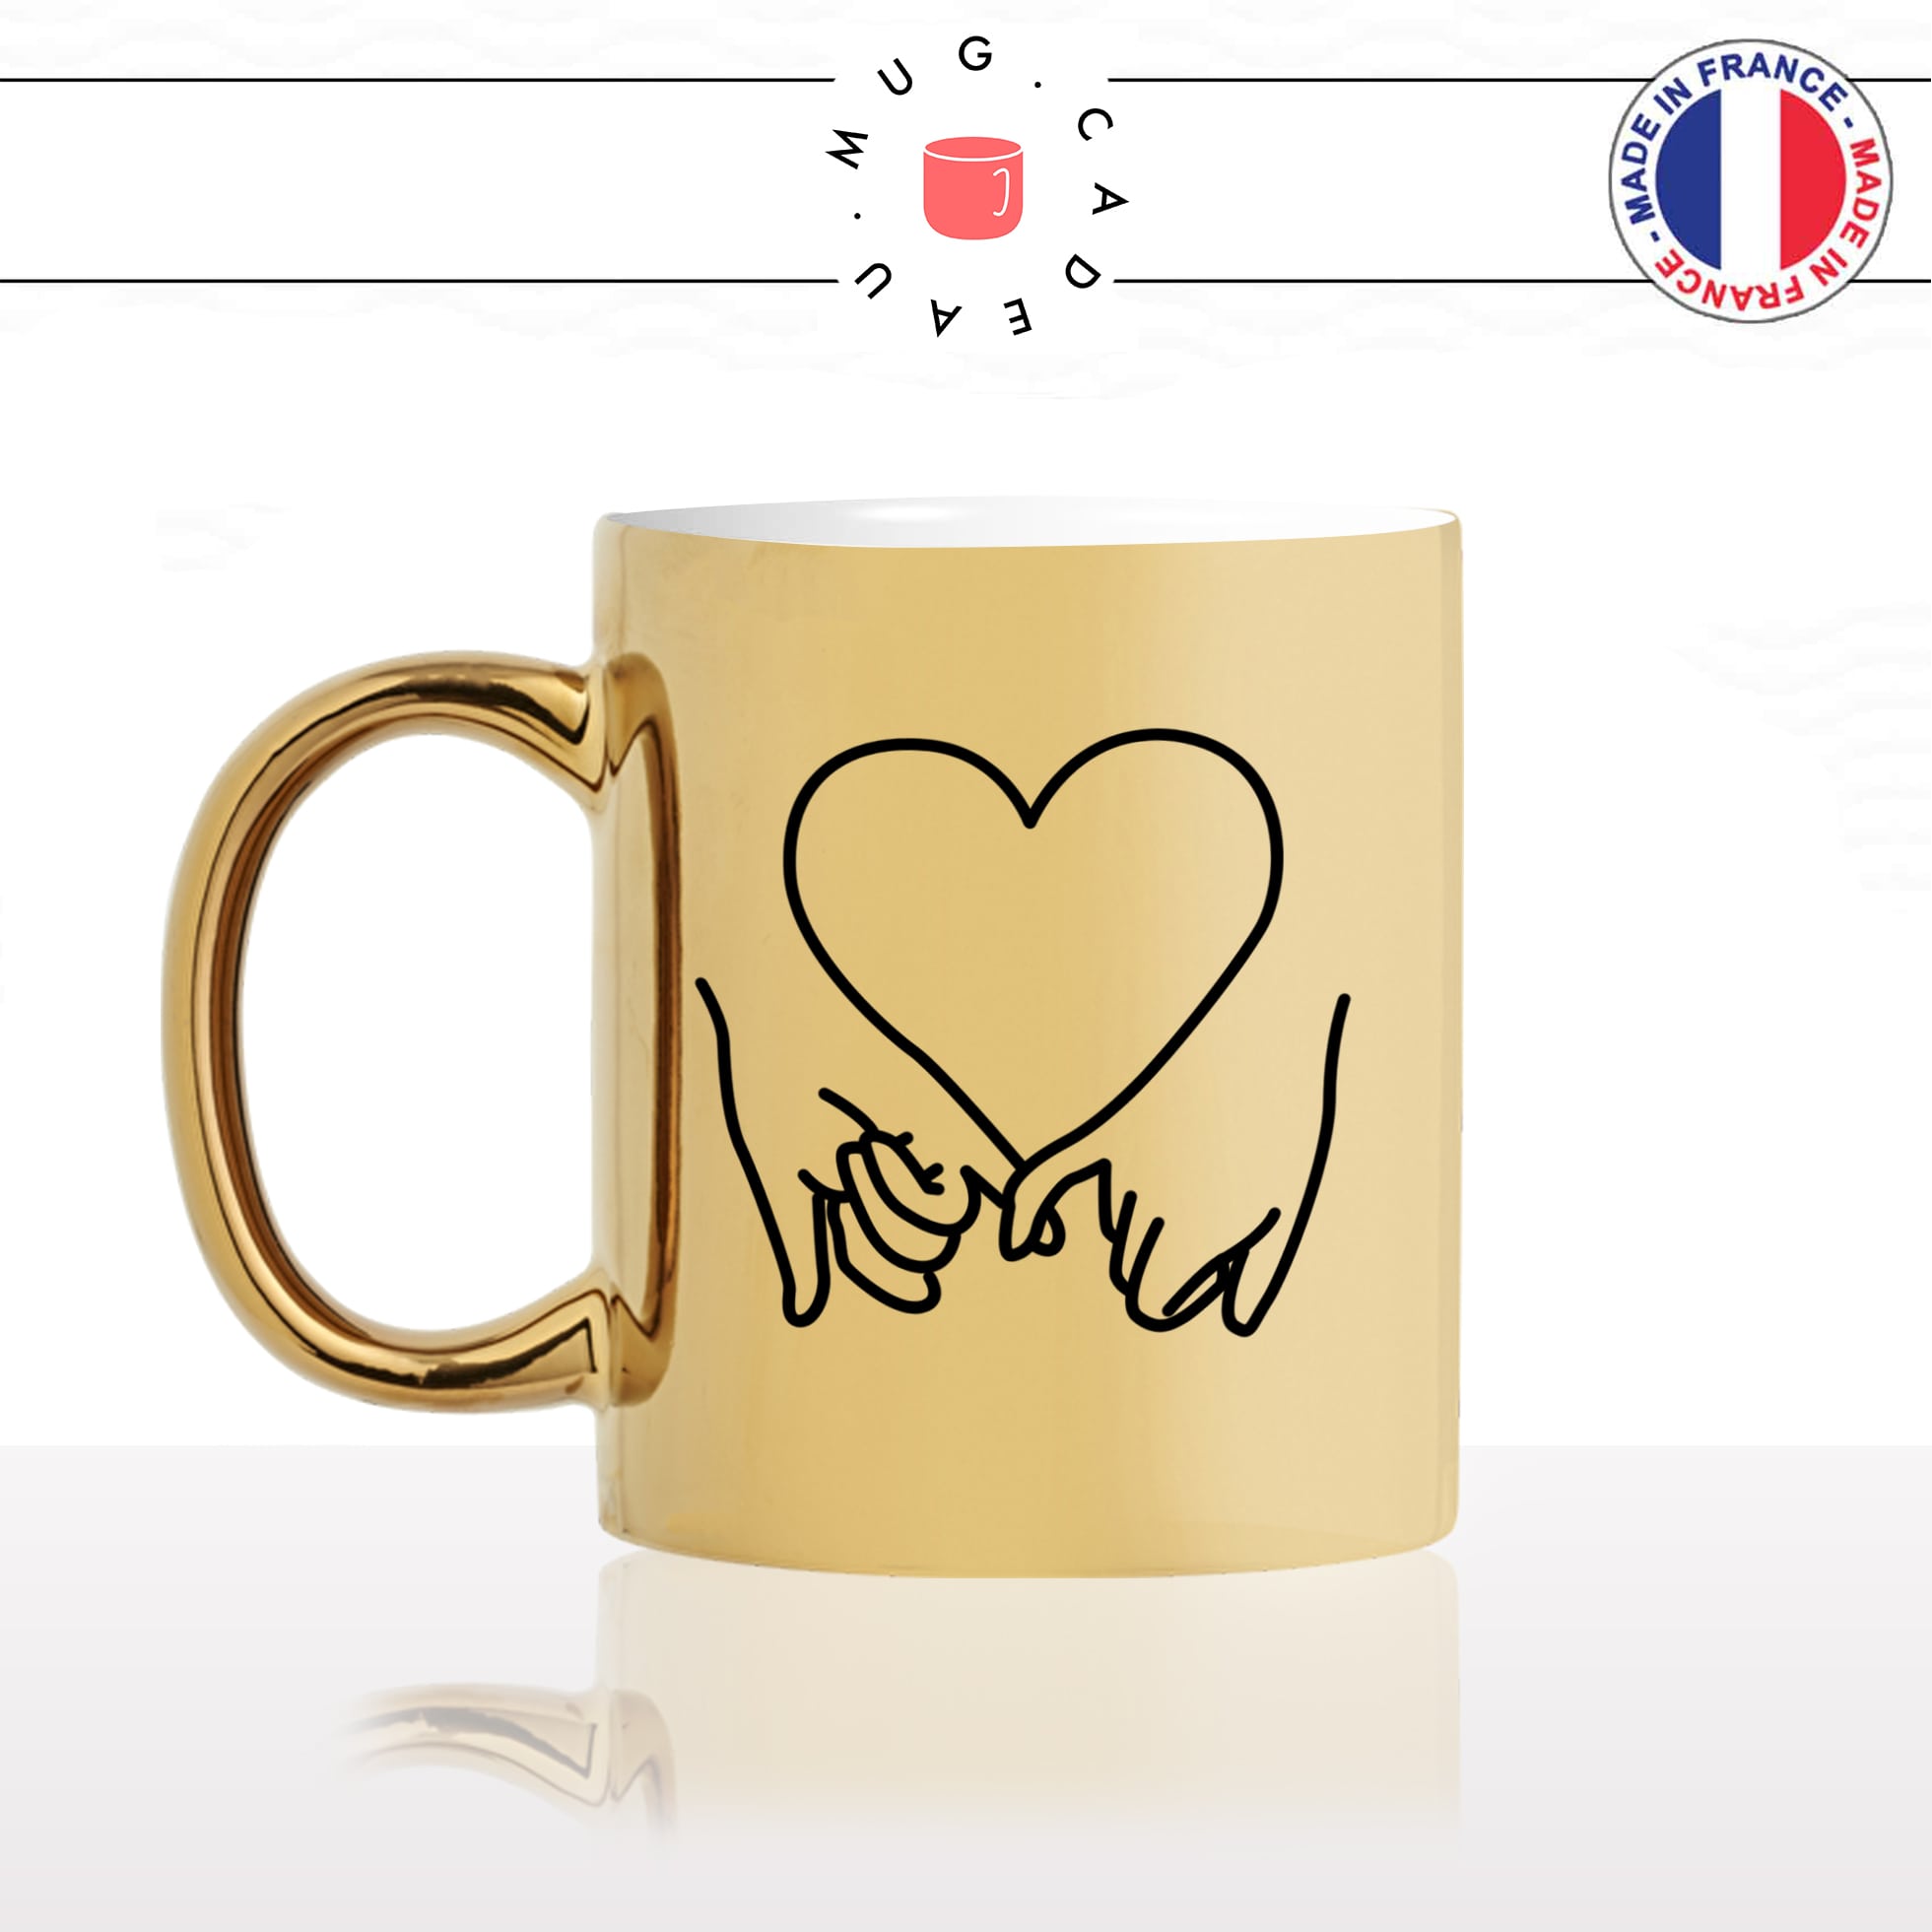 Mug-nounou d'amour mini coeur